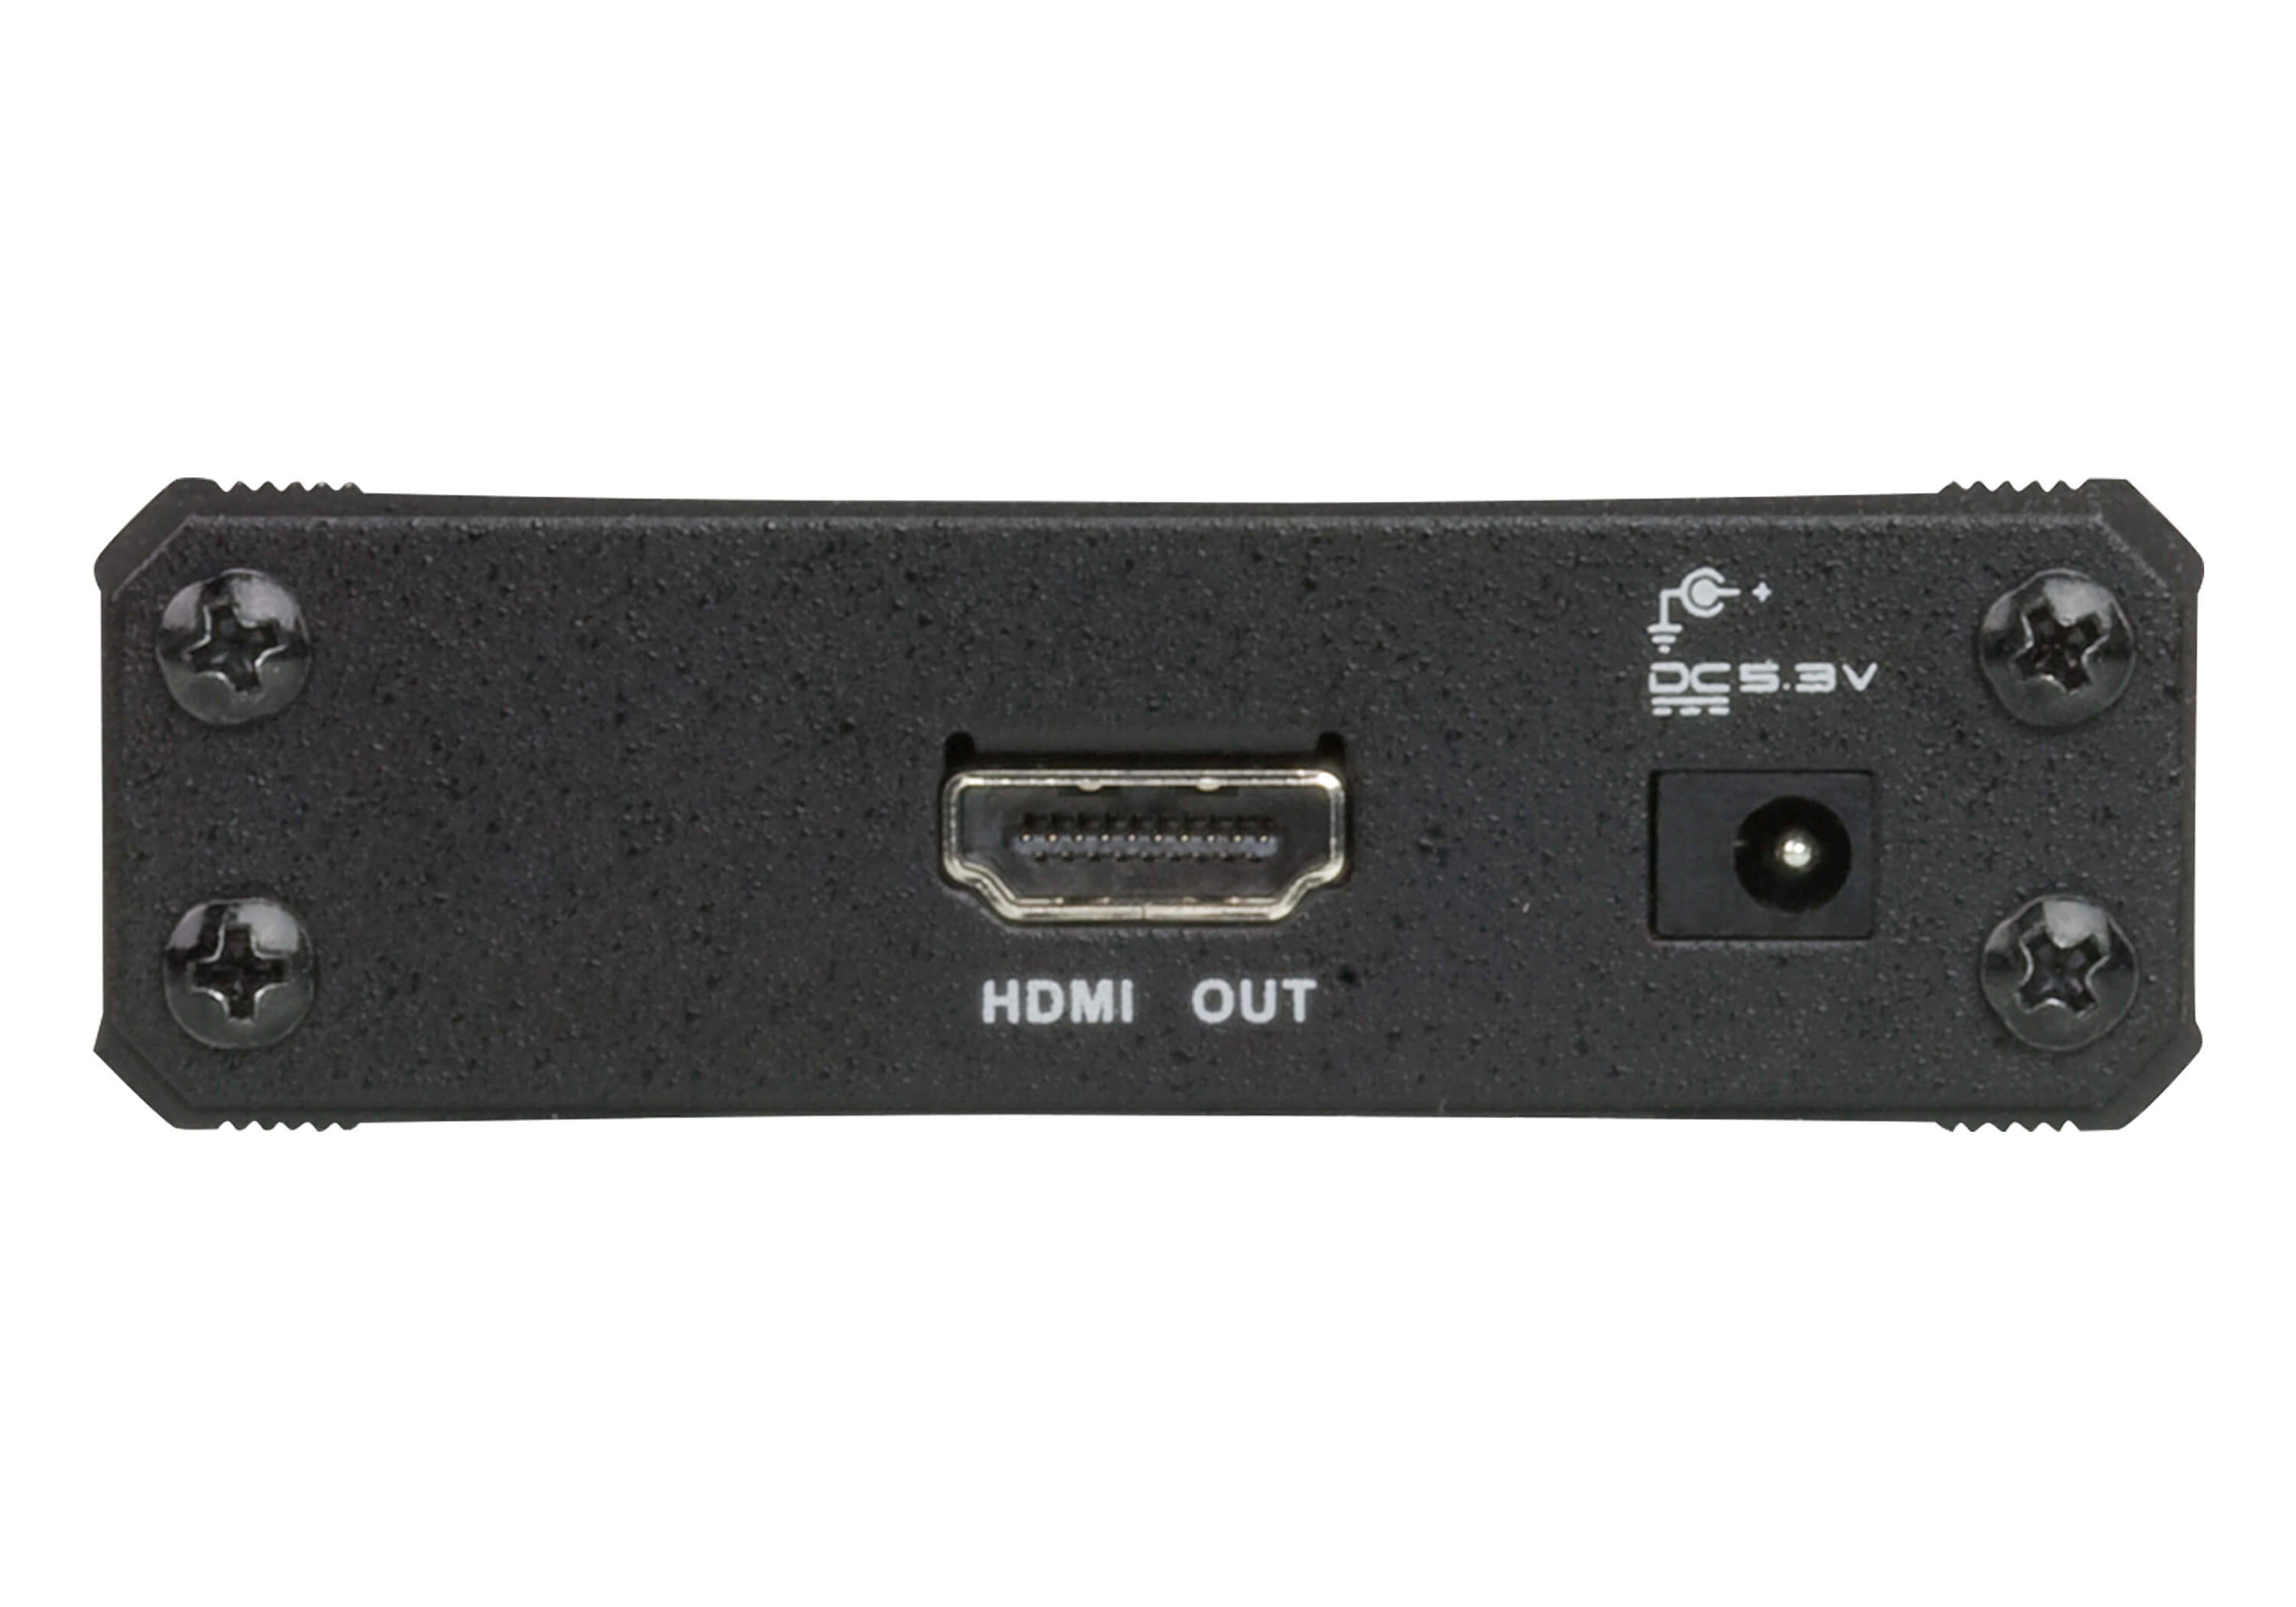 Aten Converter, VGA to HDMI with audio - VC180